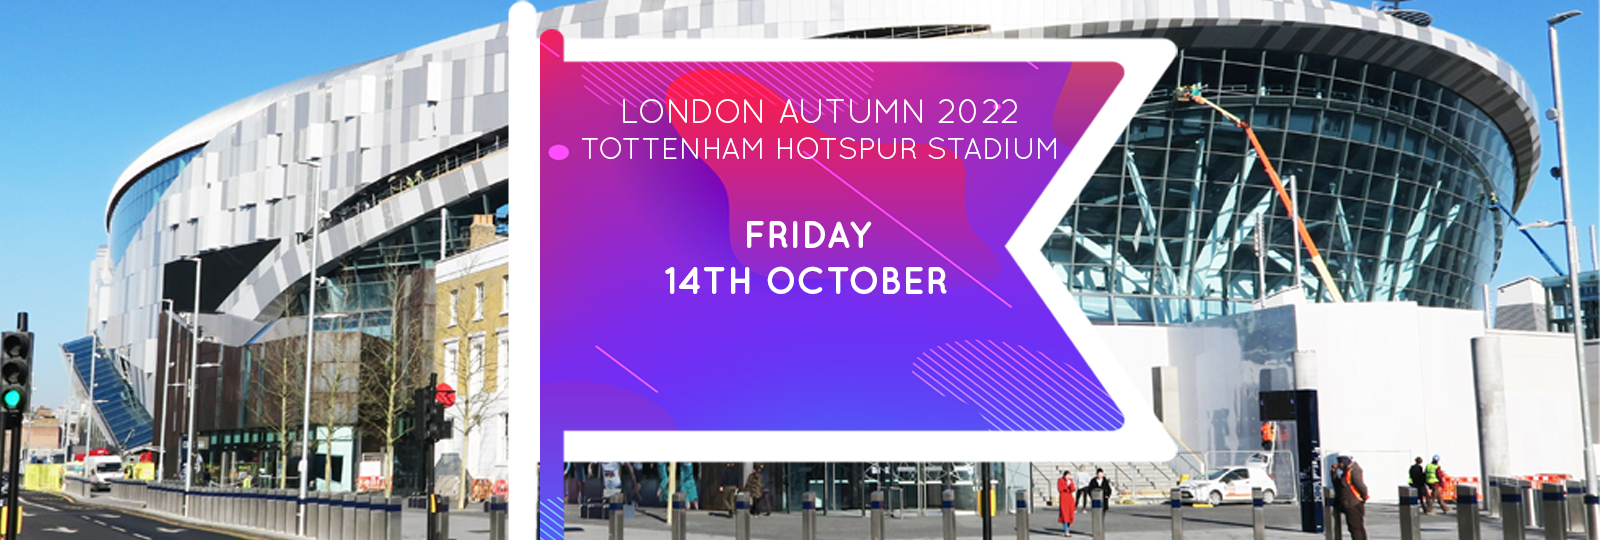 London Autumn 2022 Fair